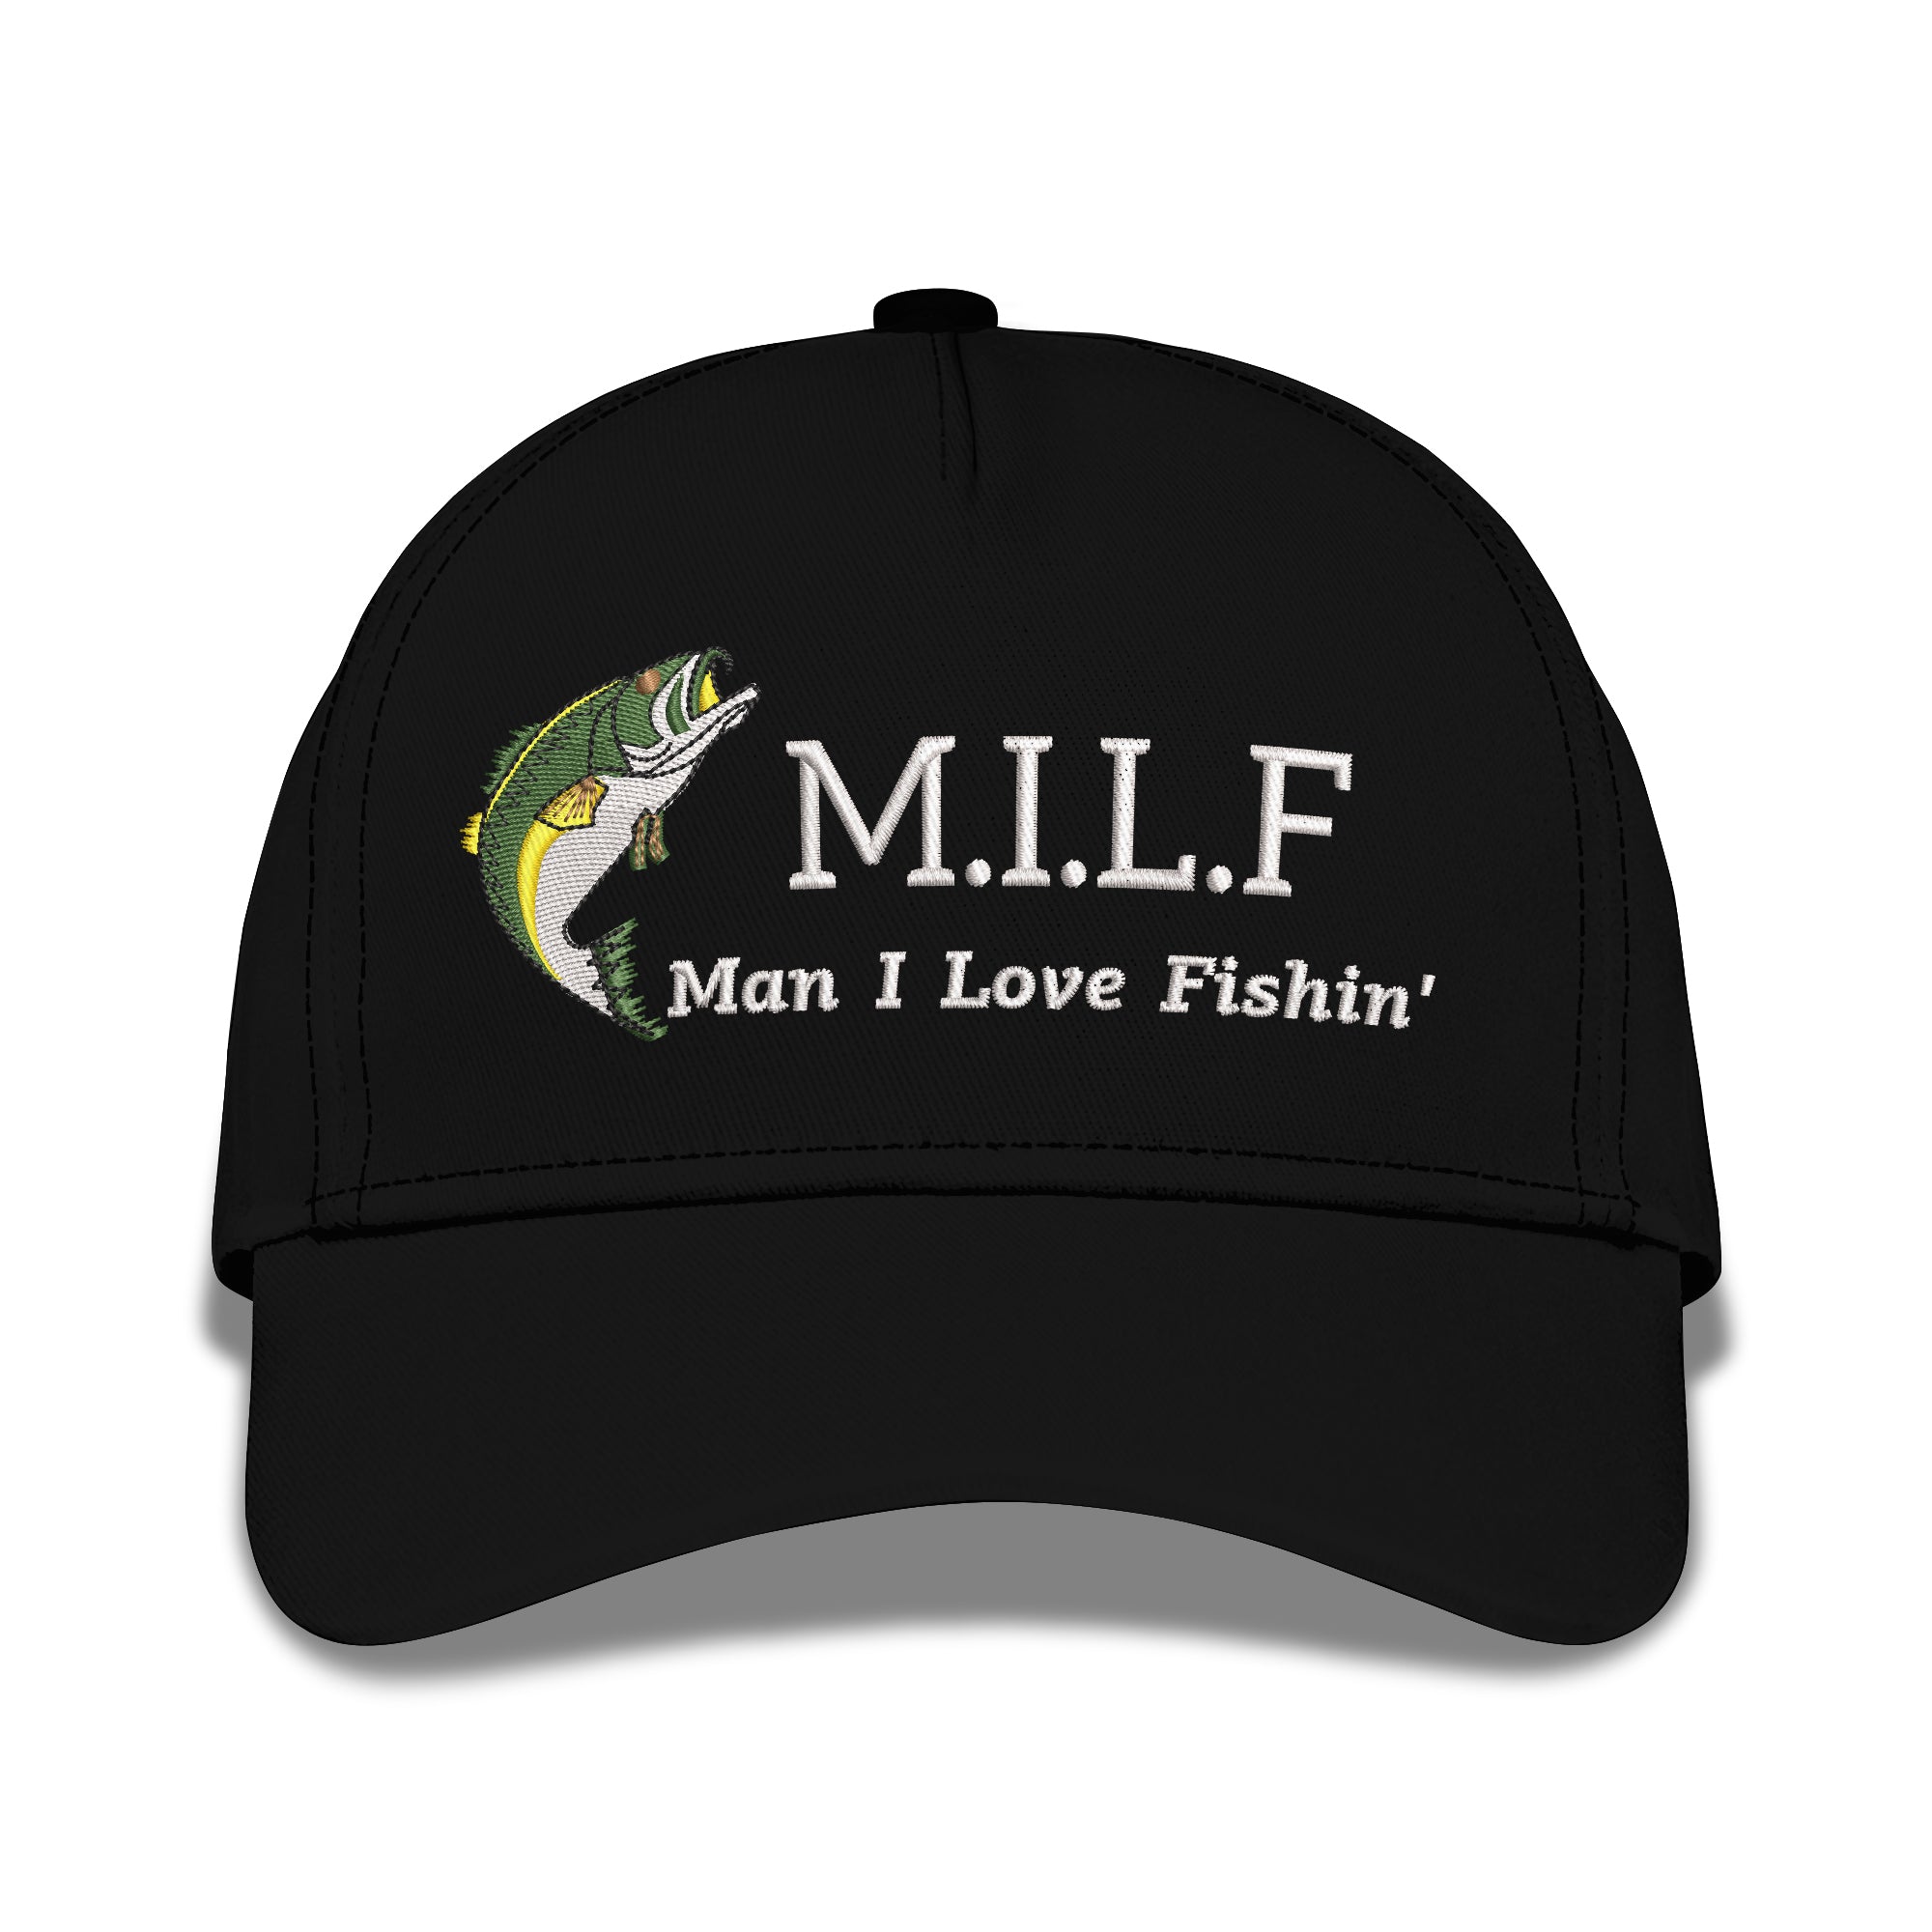 MILF Man I Love Fishin' Embroidered Baseball Caps